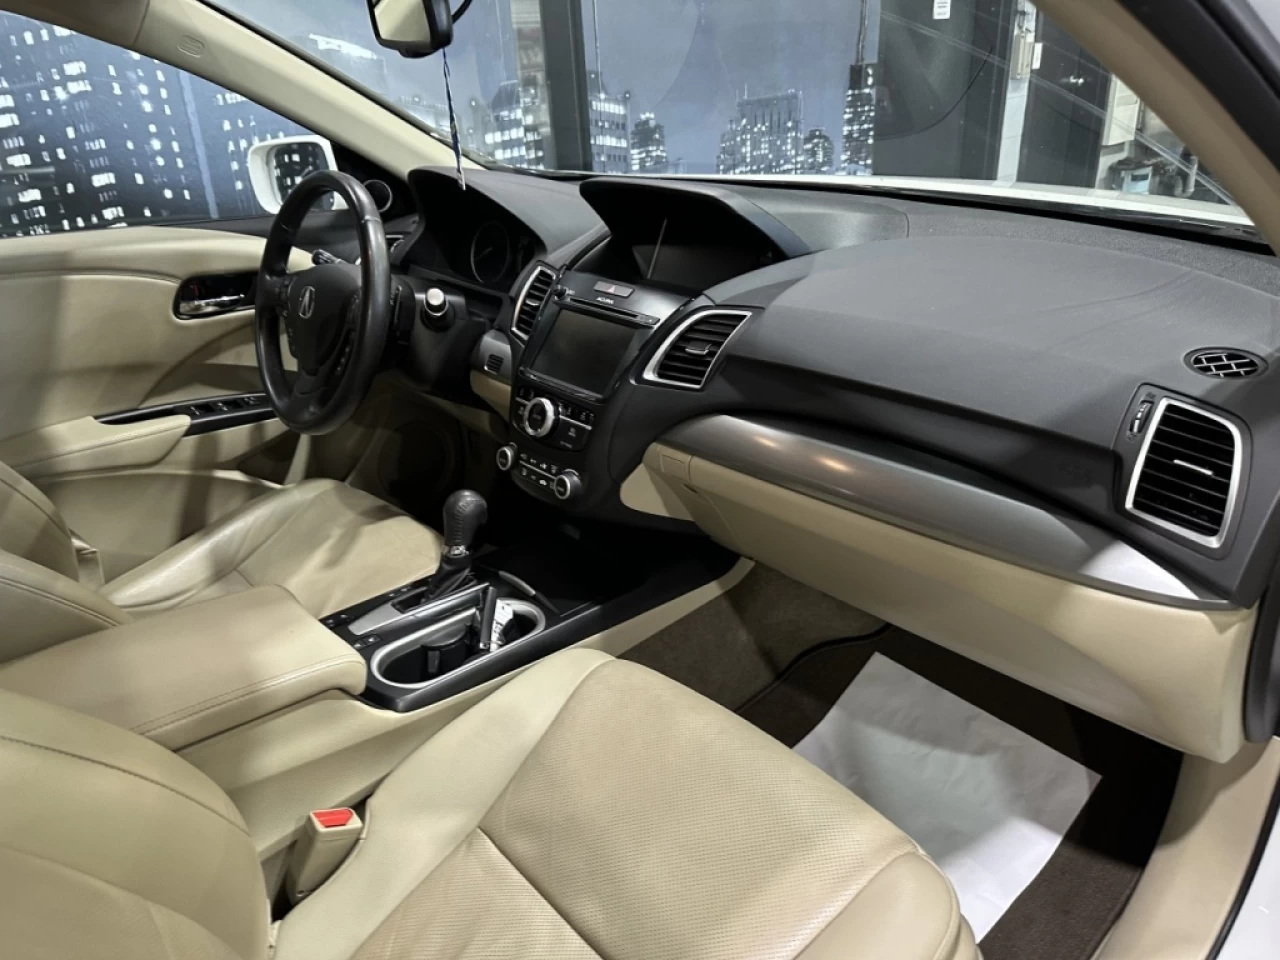 2016 Acura RDX ELITE AWD 3.5L FULL CUIR TOIT GPS AVEC 112 700KM Image principale